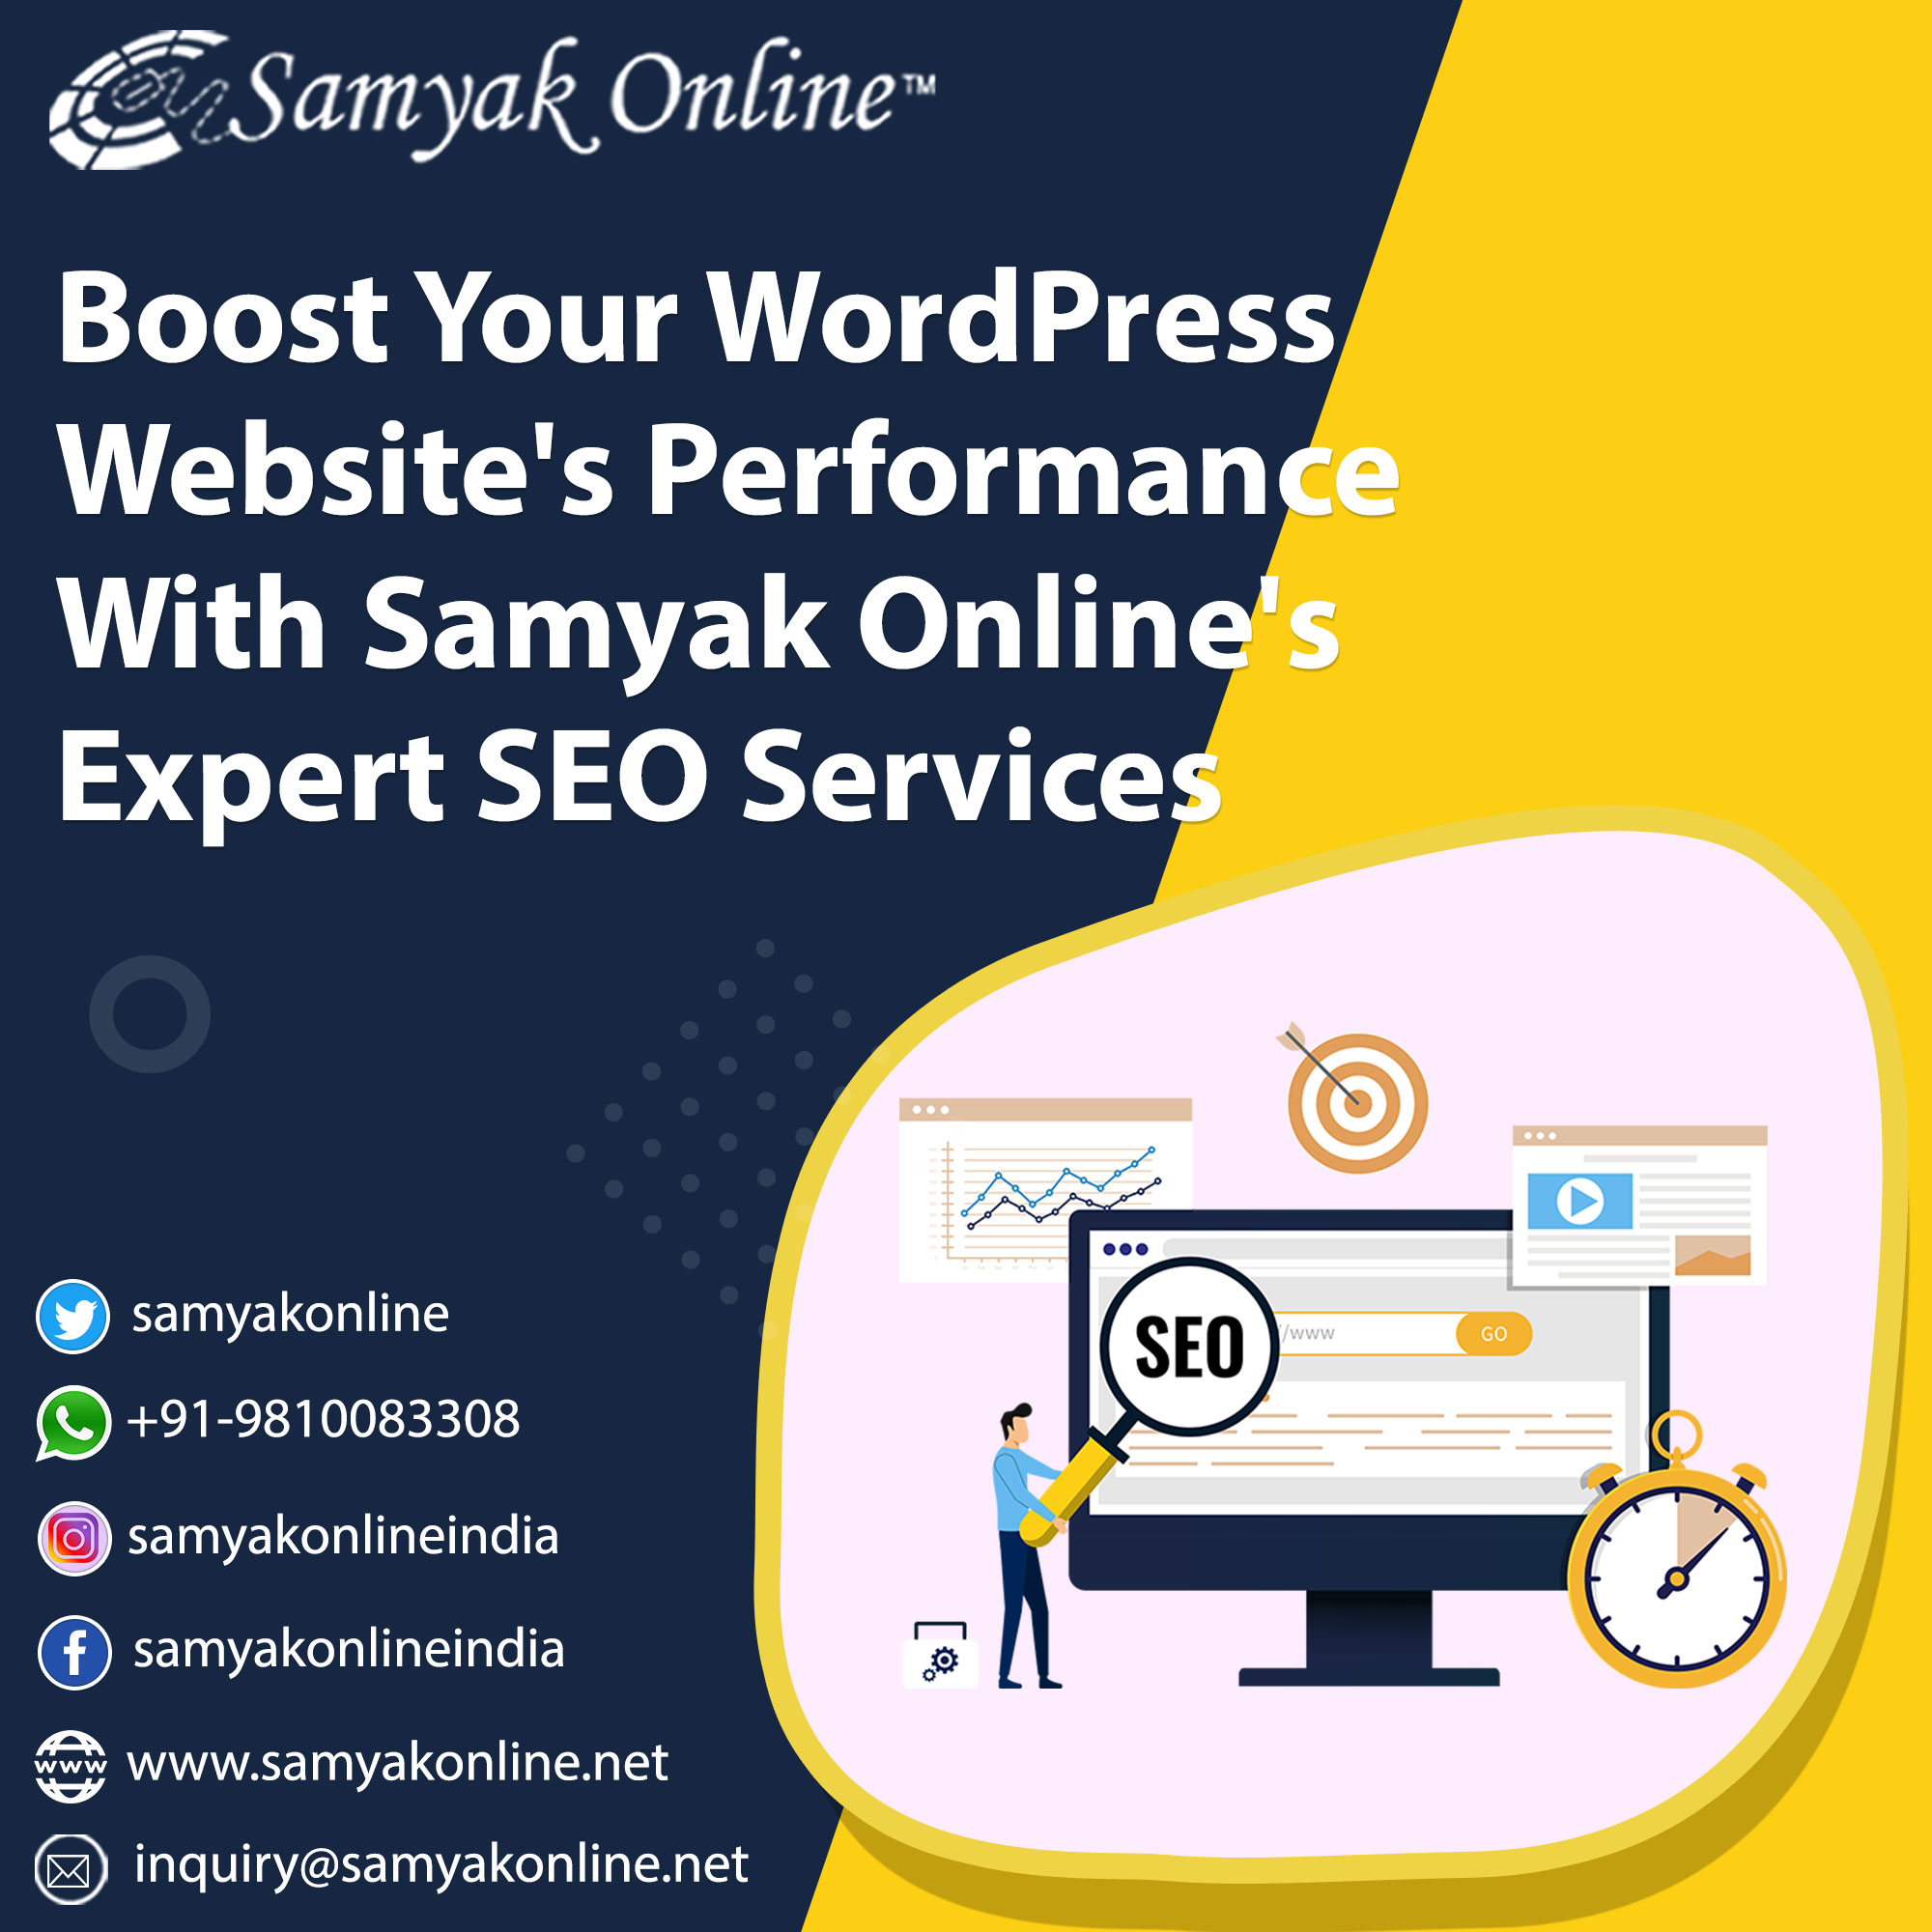 ZZ. ne
ERs IO

Boost Your WordPress
Website's Performan
With Samyak Online
Expert SEO Services

samyakonline

(©) +91-9810083308
samyakonlineindia

(f) samyakonlineindia

frm q

wy Www.samyakonline.net

inquiry@samyakonline.net